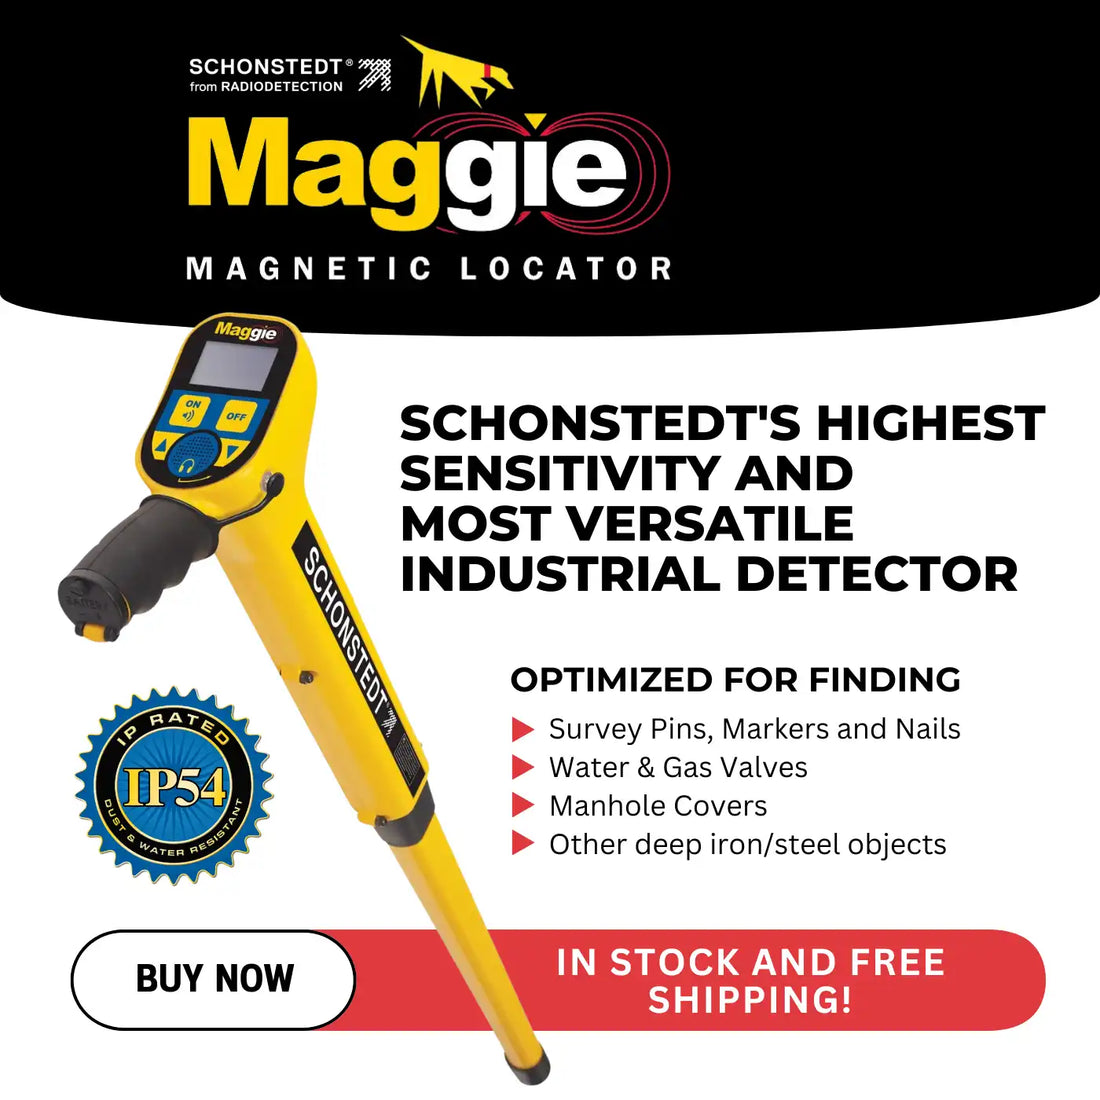 Best Metal Detector Locator - Maggie Versatile Industrial Detector: Pins, Markers, Nails, Water, Gas Valves, Manhole covers, deep iron/steel